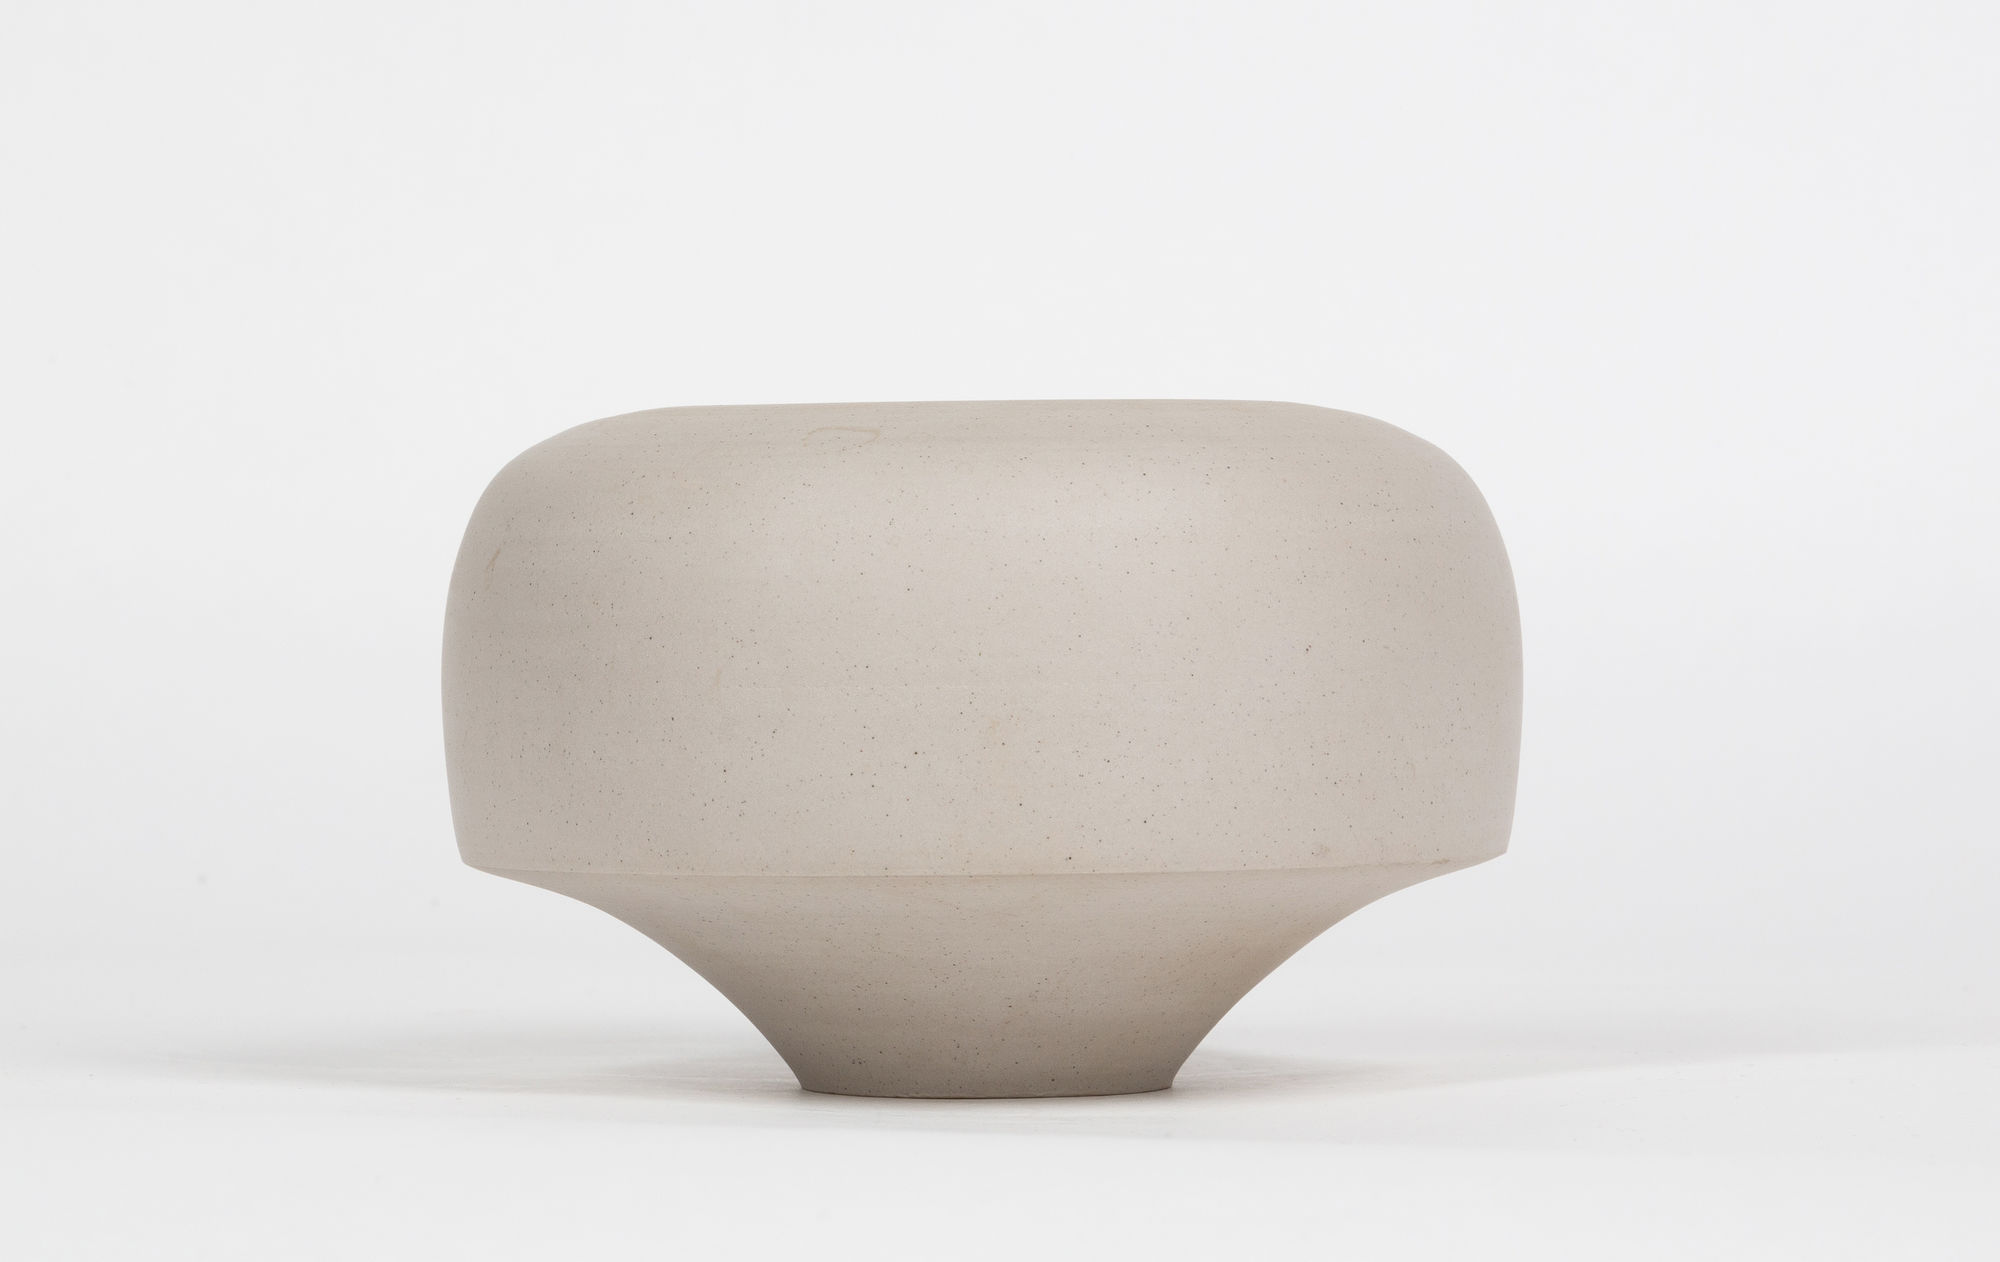 Thomas Bohle ceramic bowl